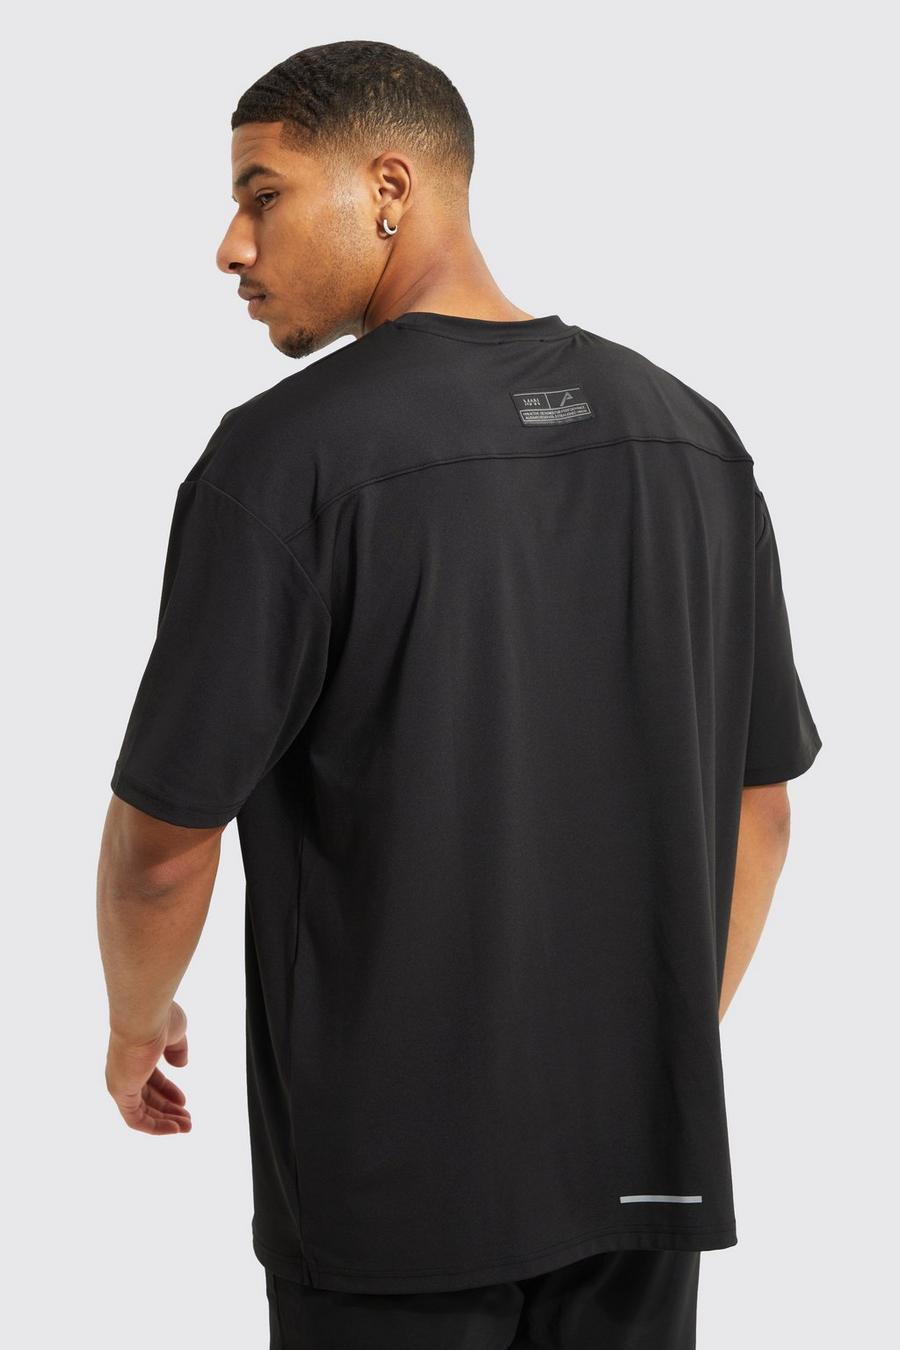 Black Tall Oversized Man Performance Fitness T-Shirt